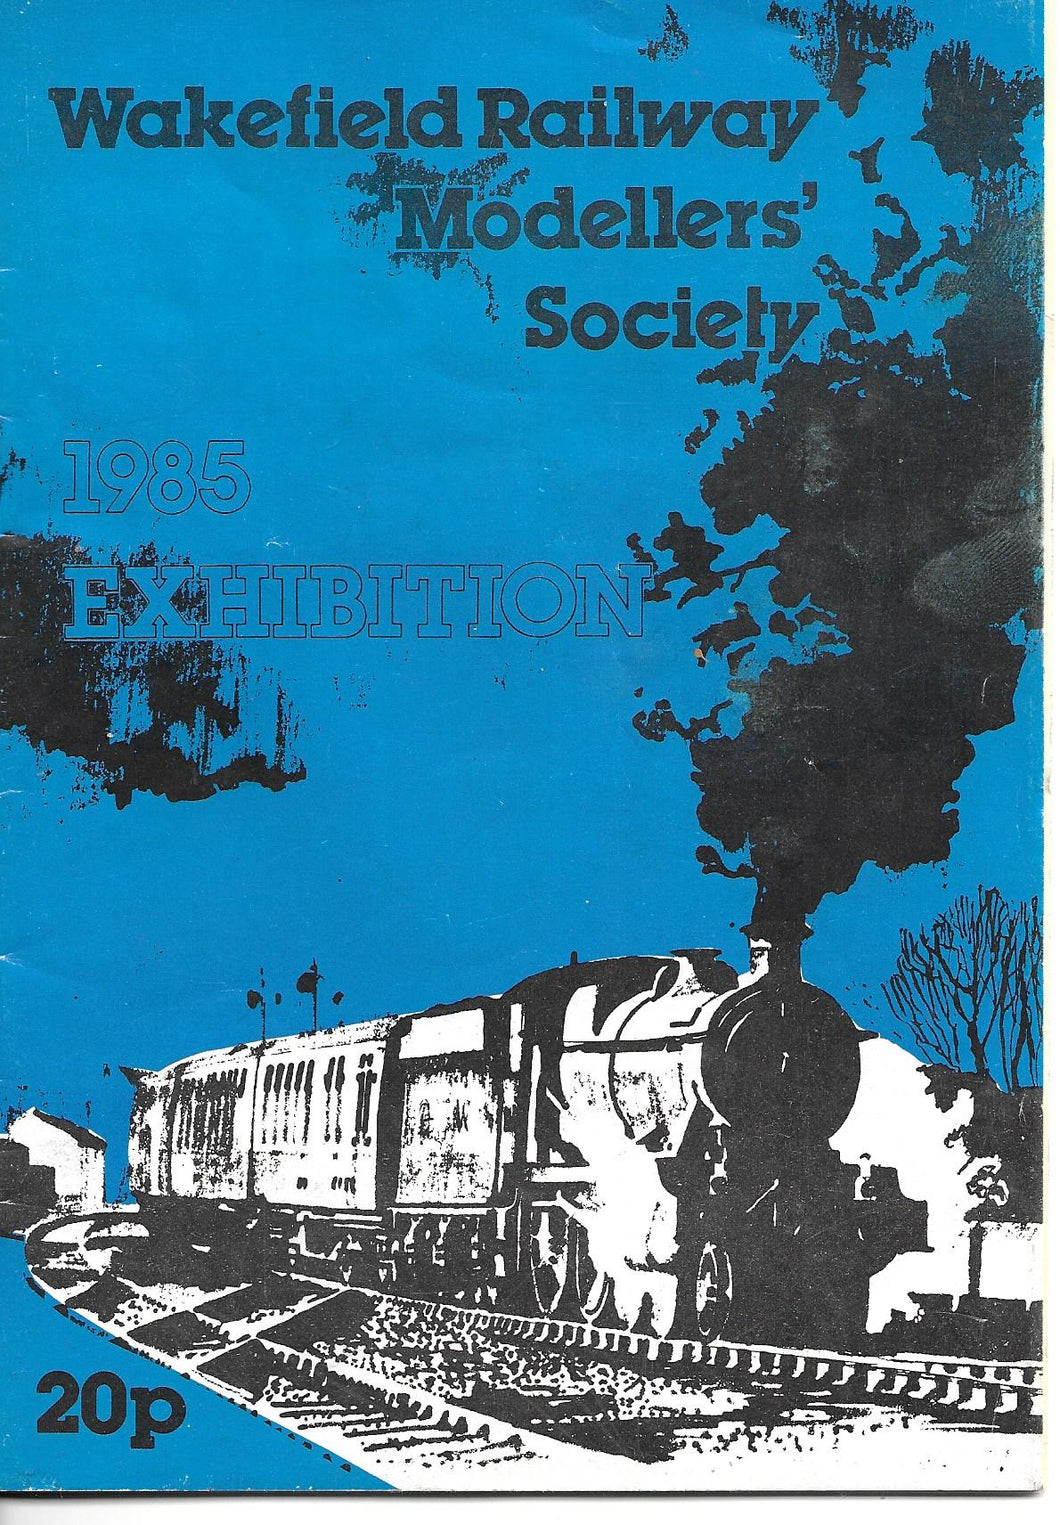 Wakefield Railway Modellers Society, 1985 Exhibition